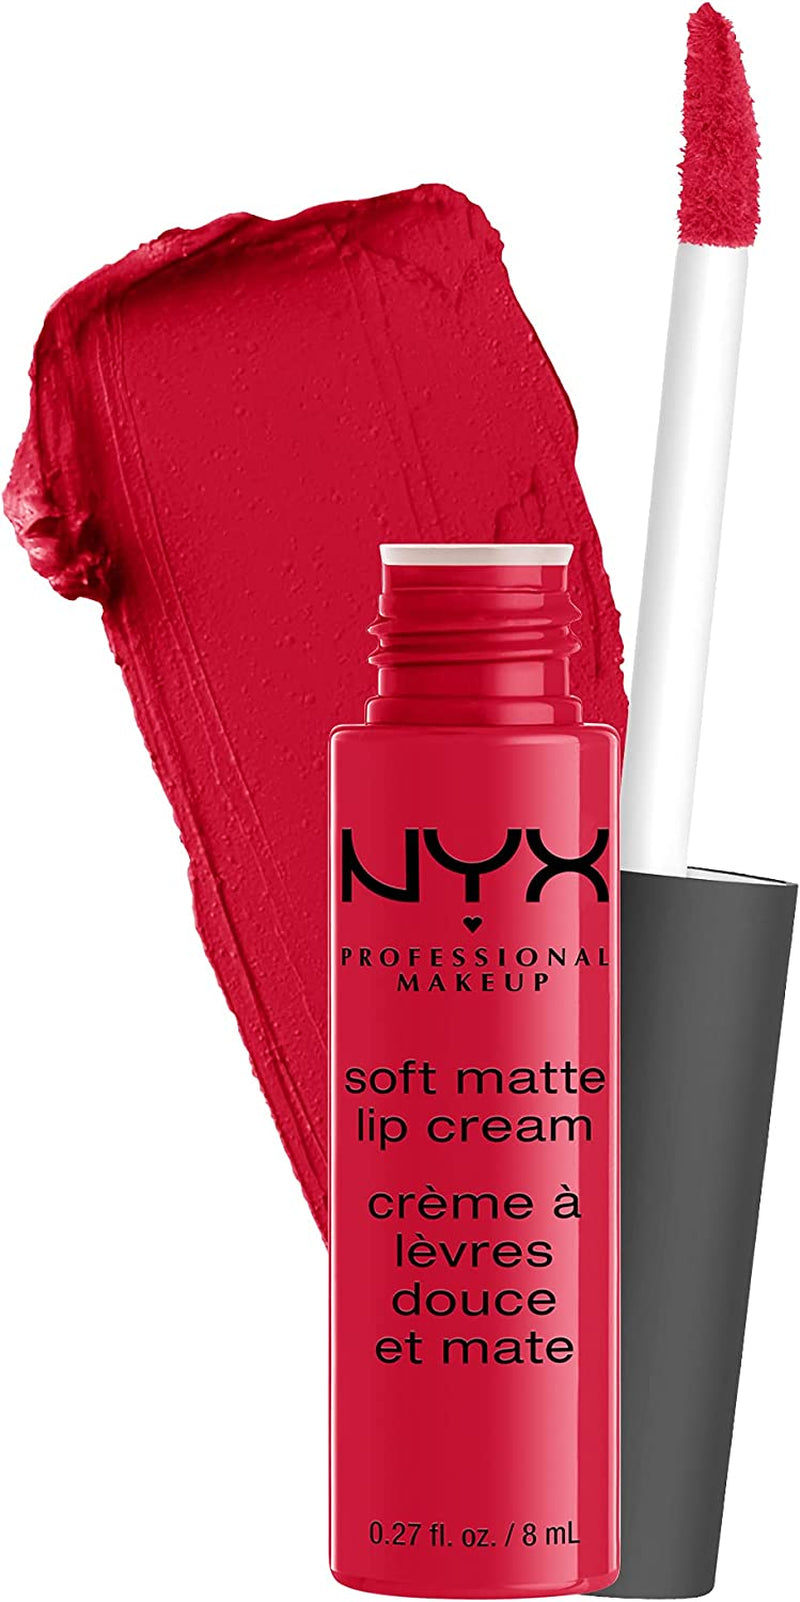 Soft Matte Lip Cream, Creamy and Matte Finish, Highly Pigmented Colour, Long Lasting, Vegan Formula, Shade: Amsterdam